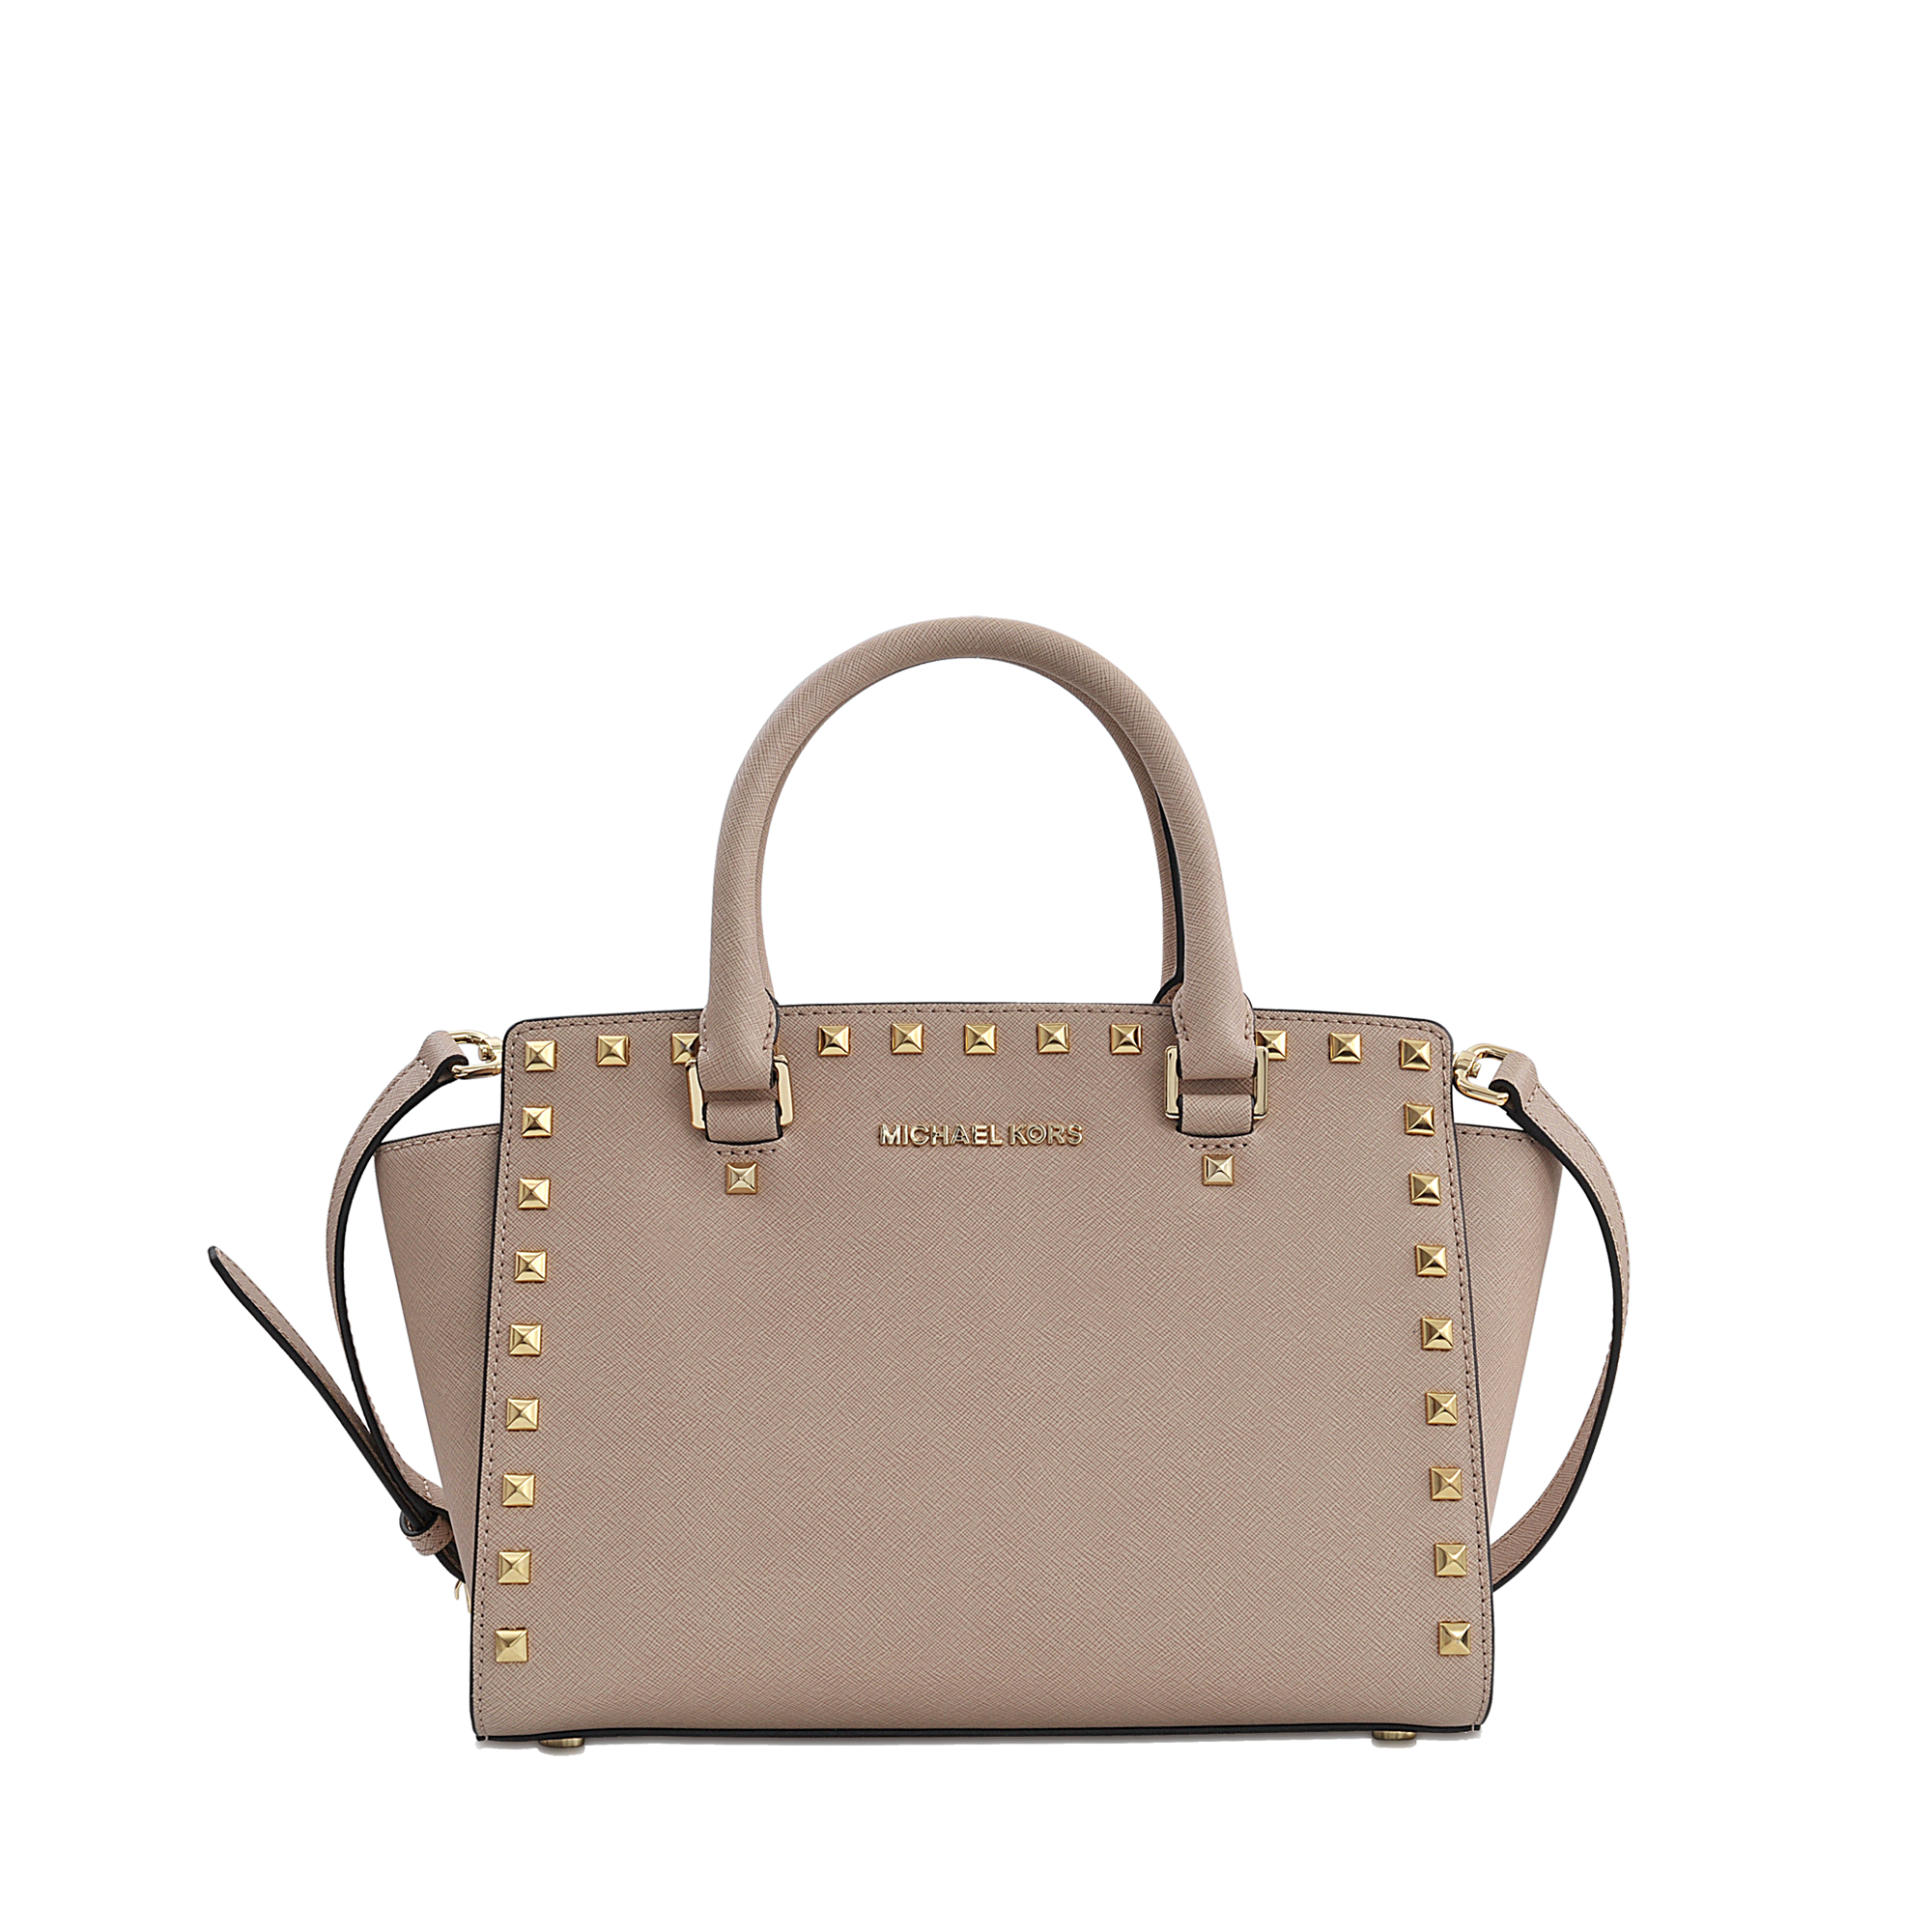 Michael Kors Studded Leather purse - Women's handbags